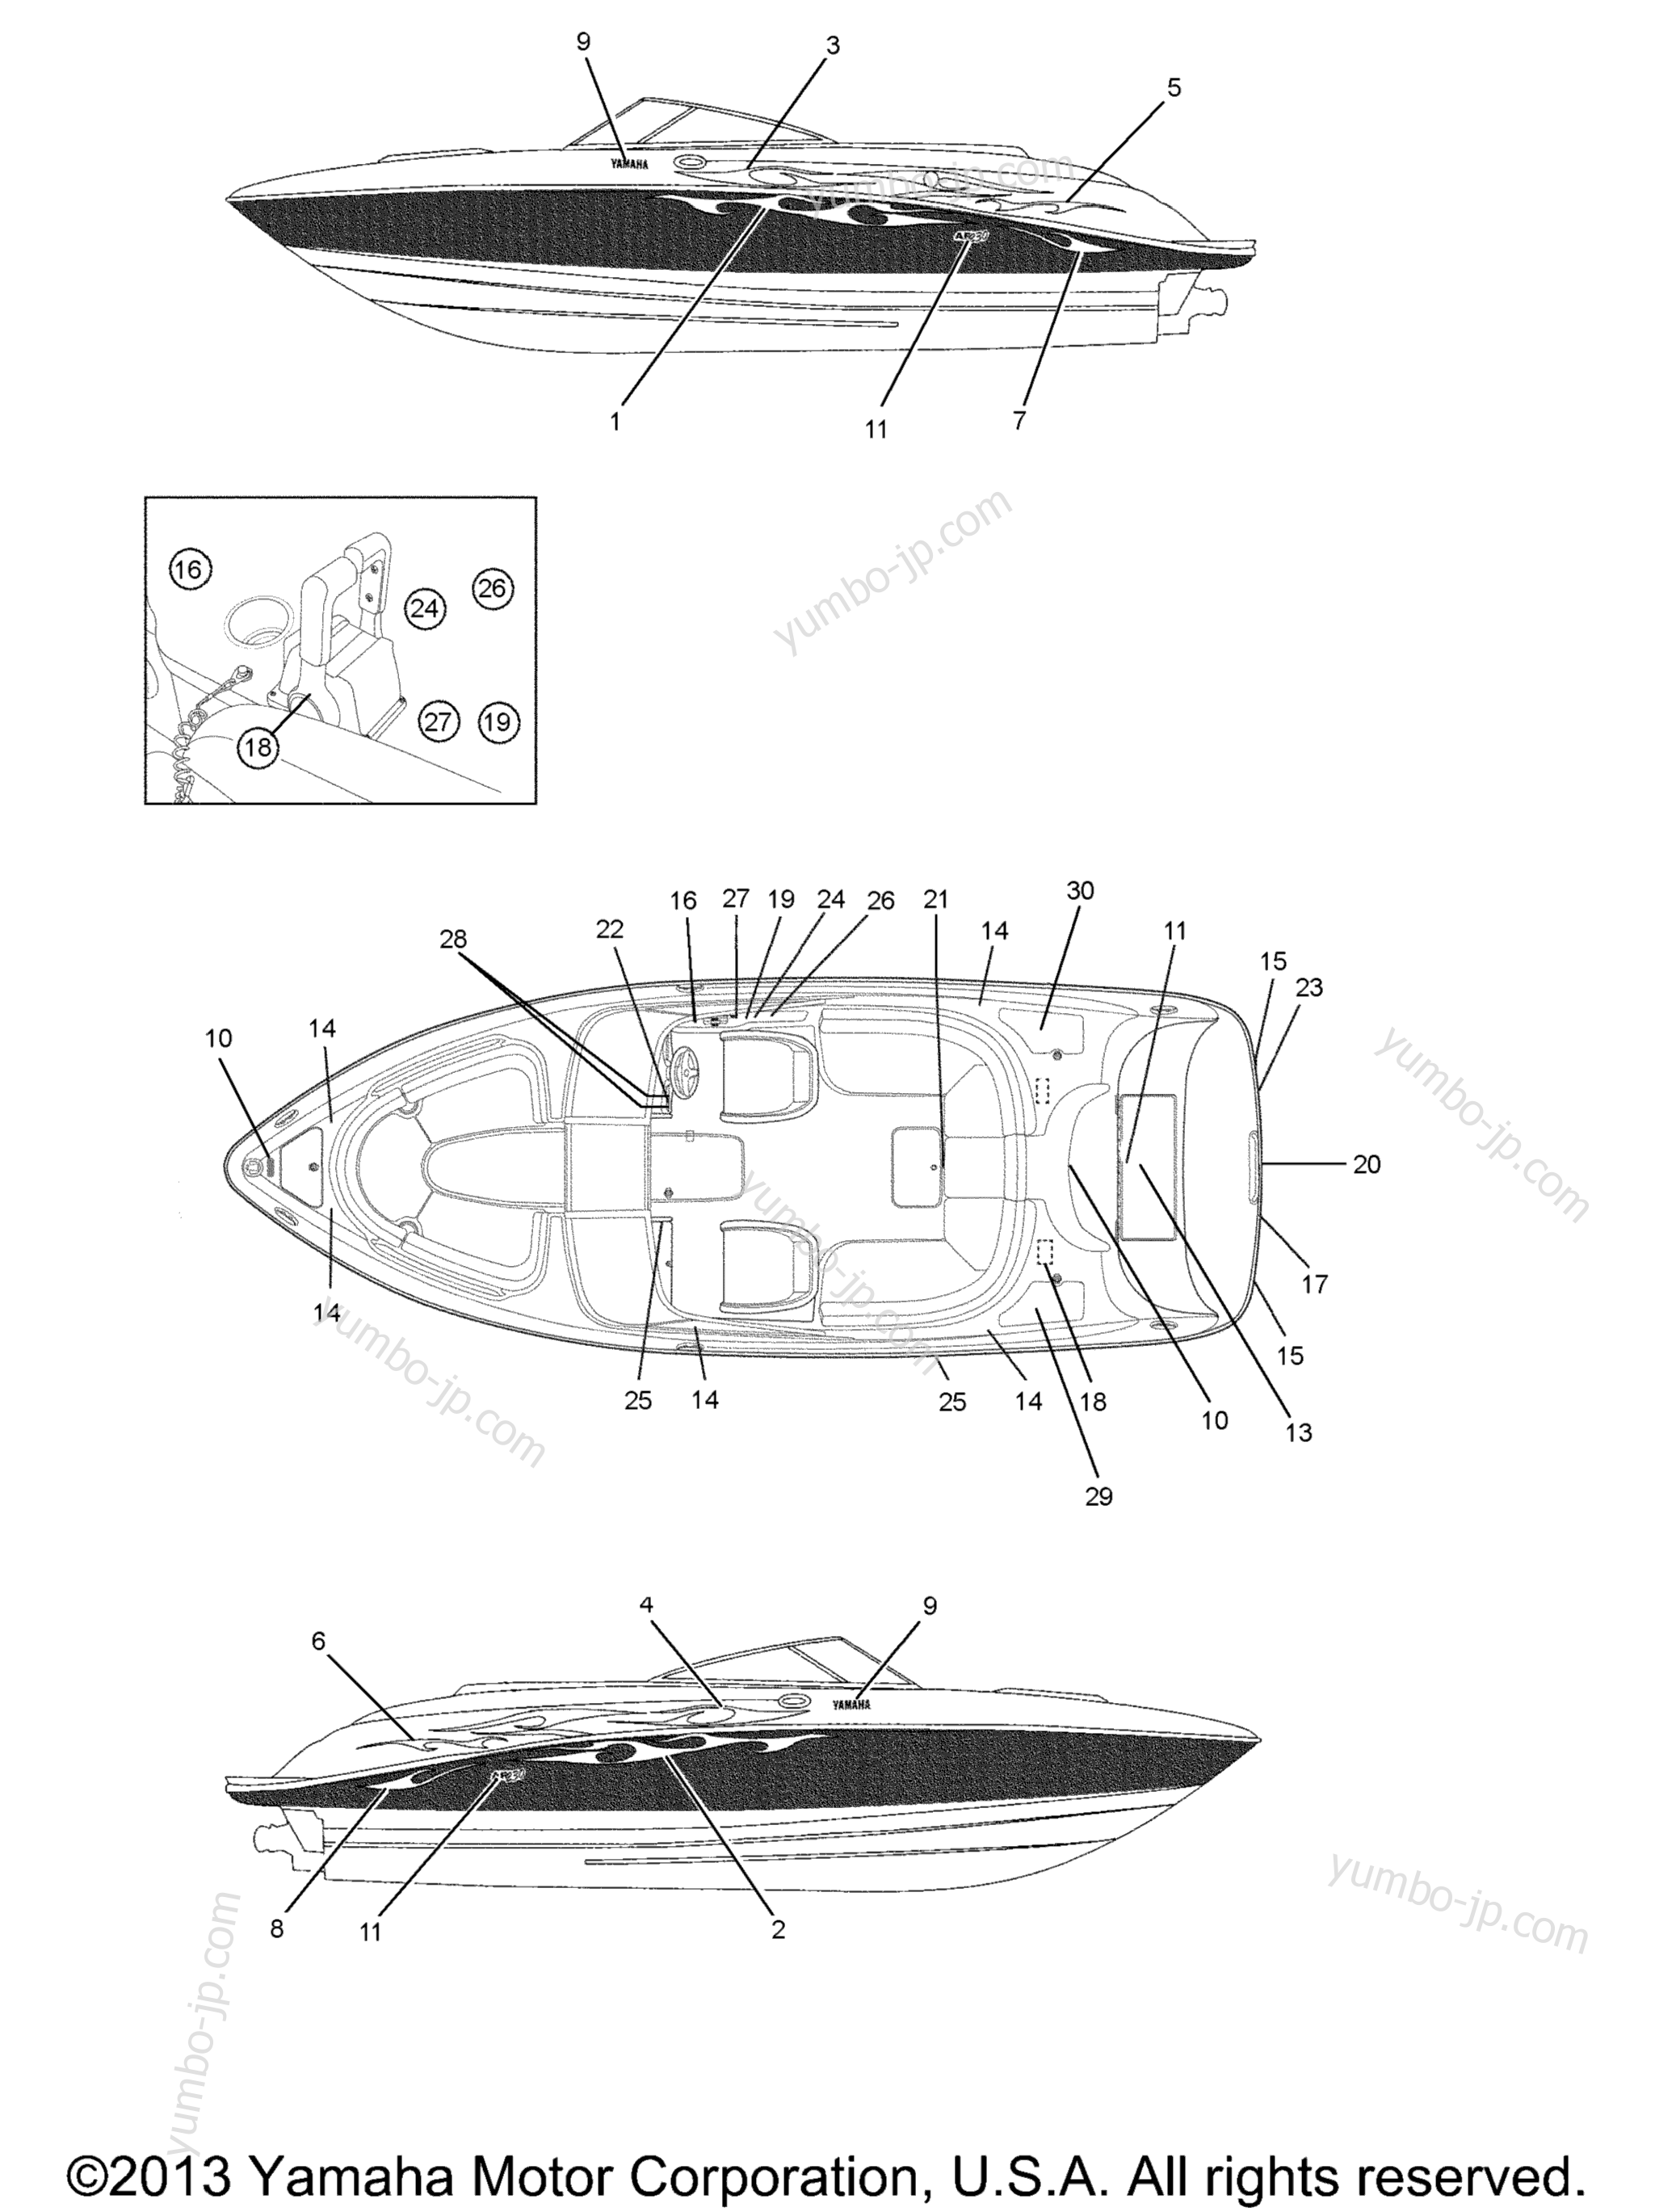 Graphics for boats YAMAHA AR230 (CALIF.) (SRT1000BCC) CA 2004 year